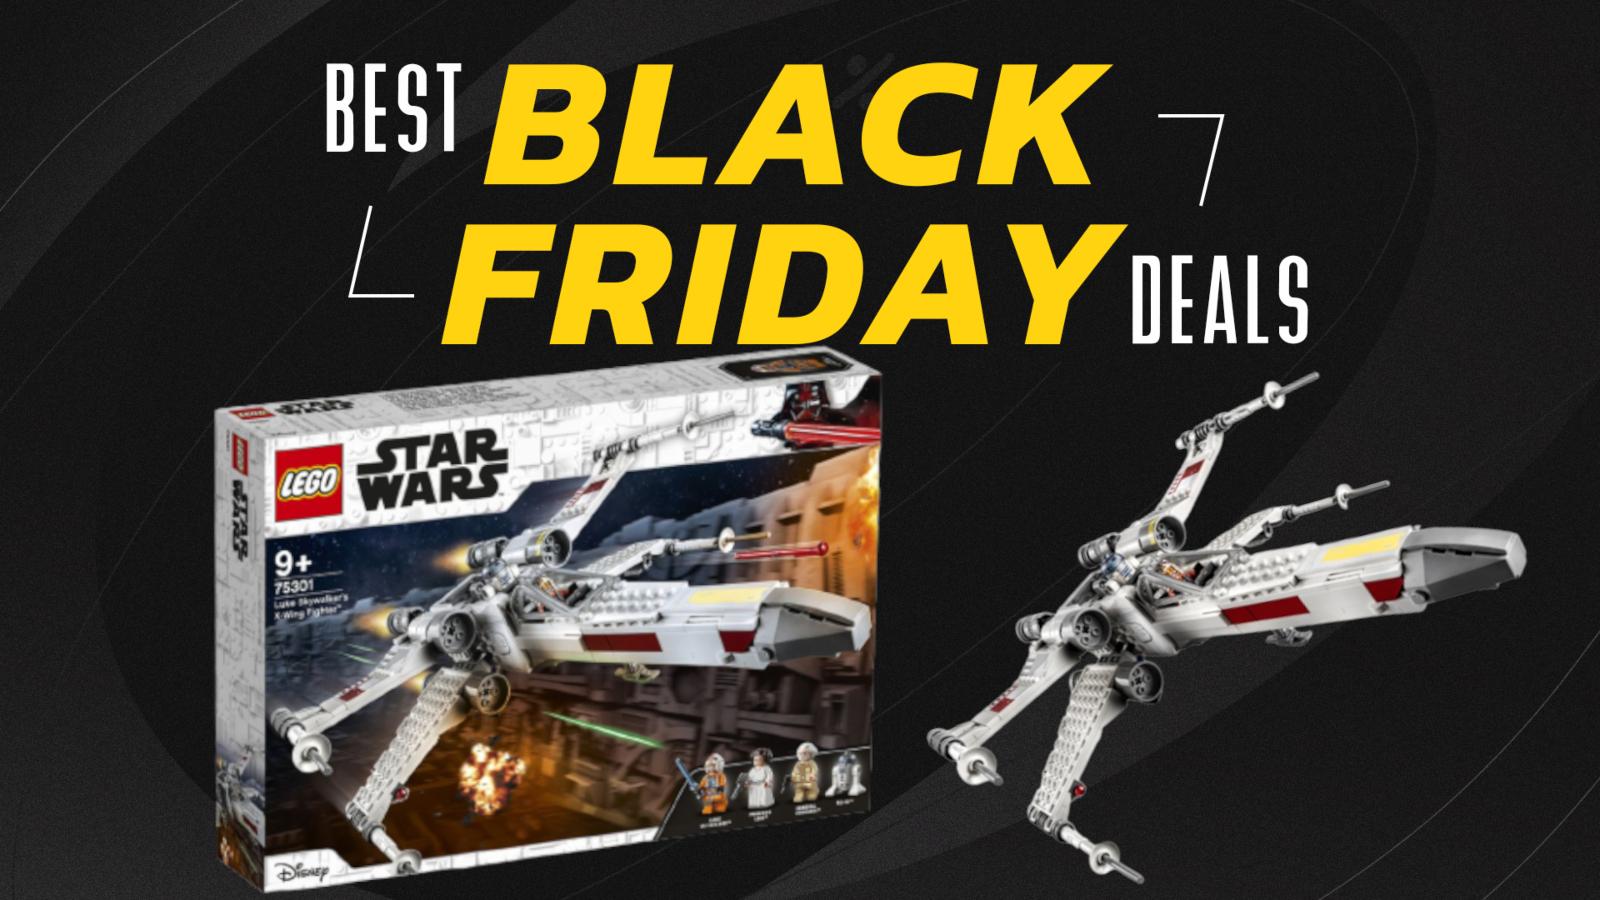 Black friday deals luke skywalker's x-wing fighter cover image